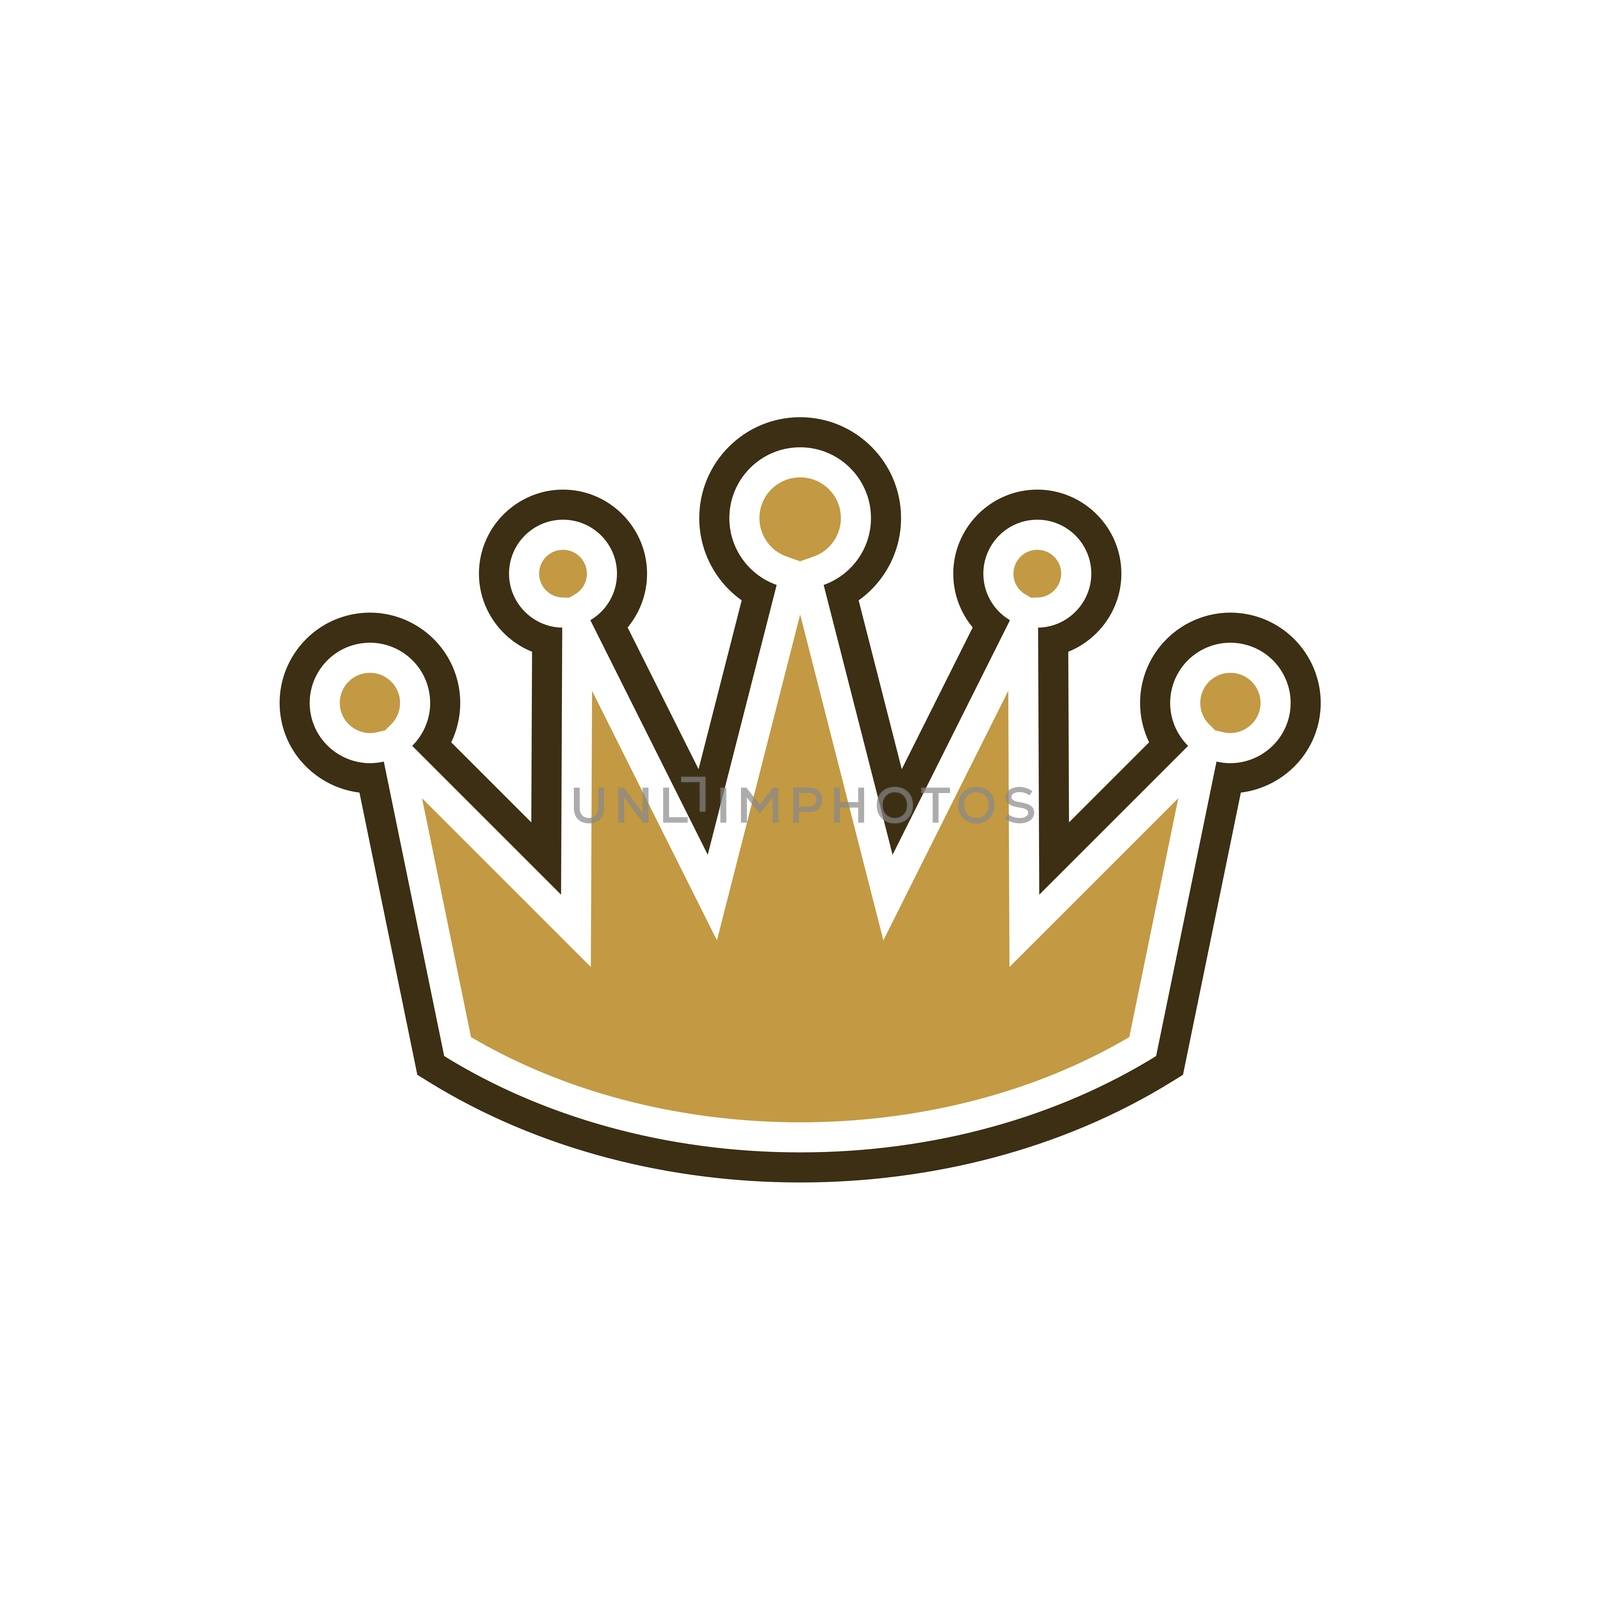 Simple Crown Logo Template Illustration Design. Vector EPS 10.